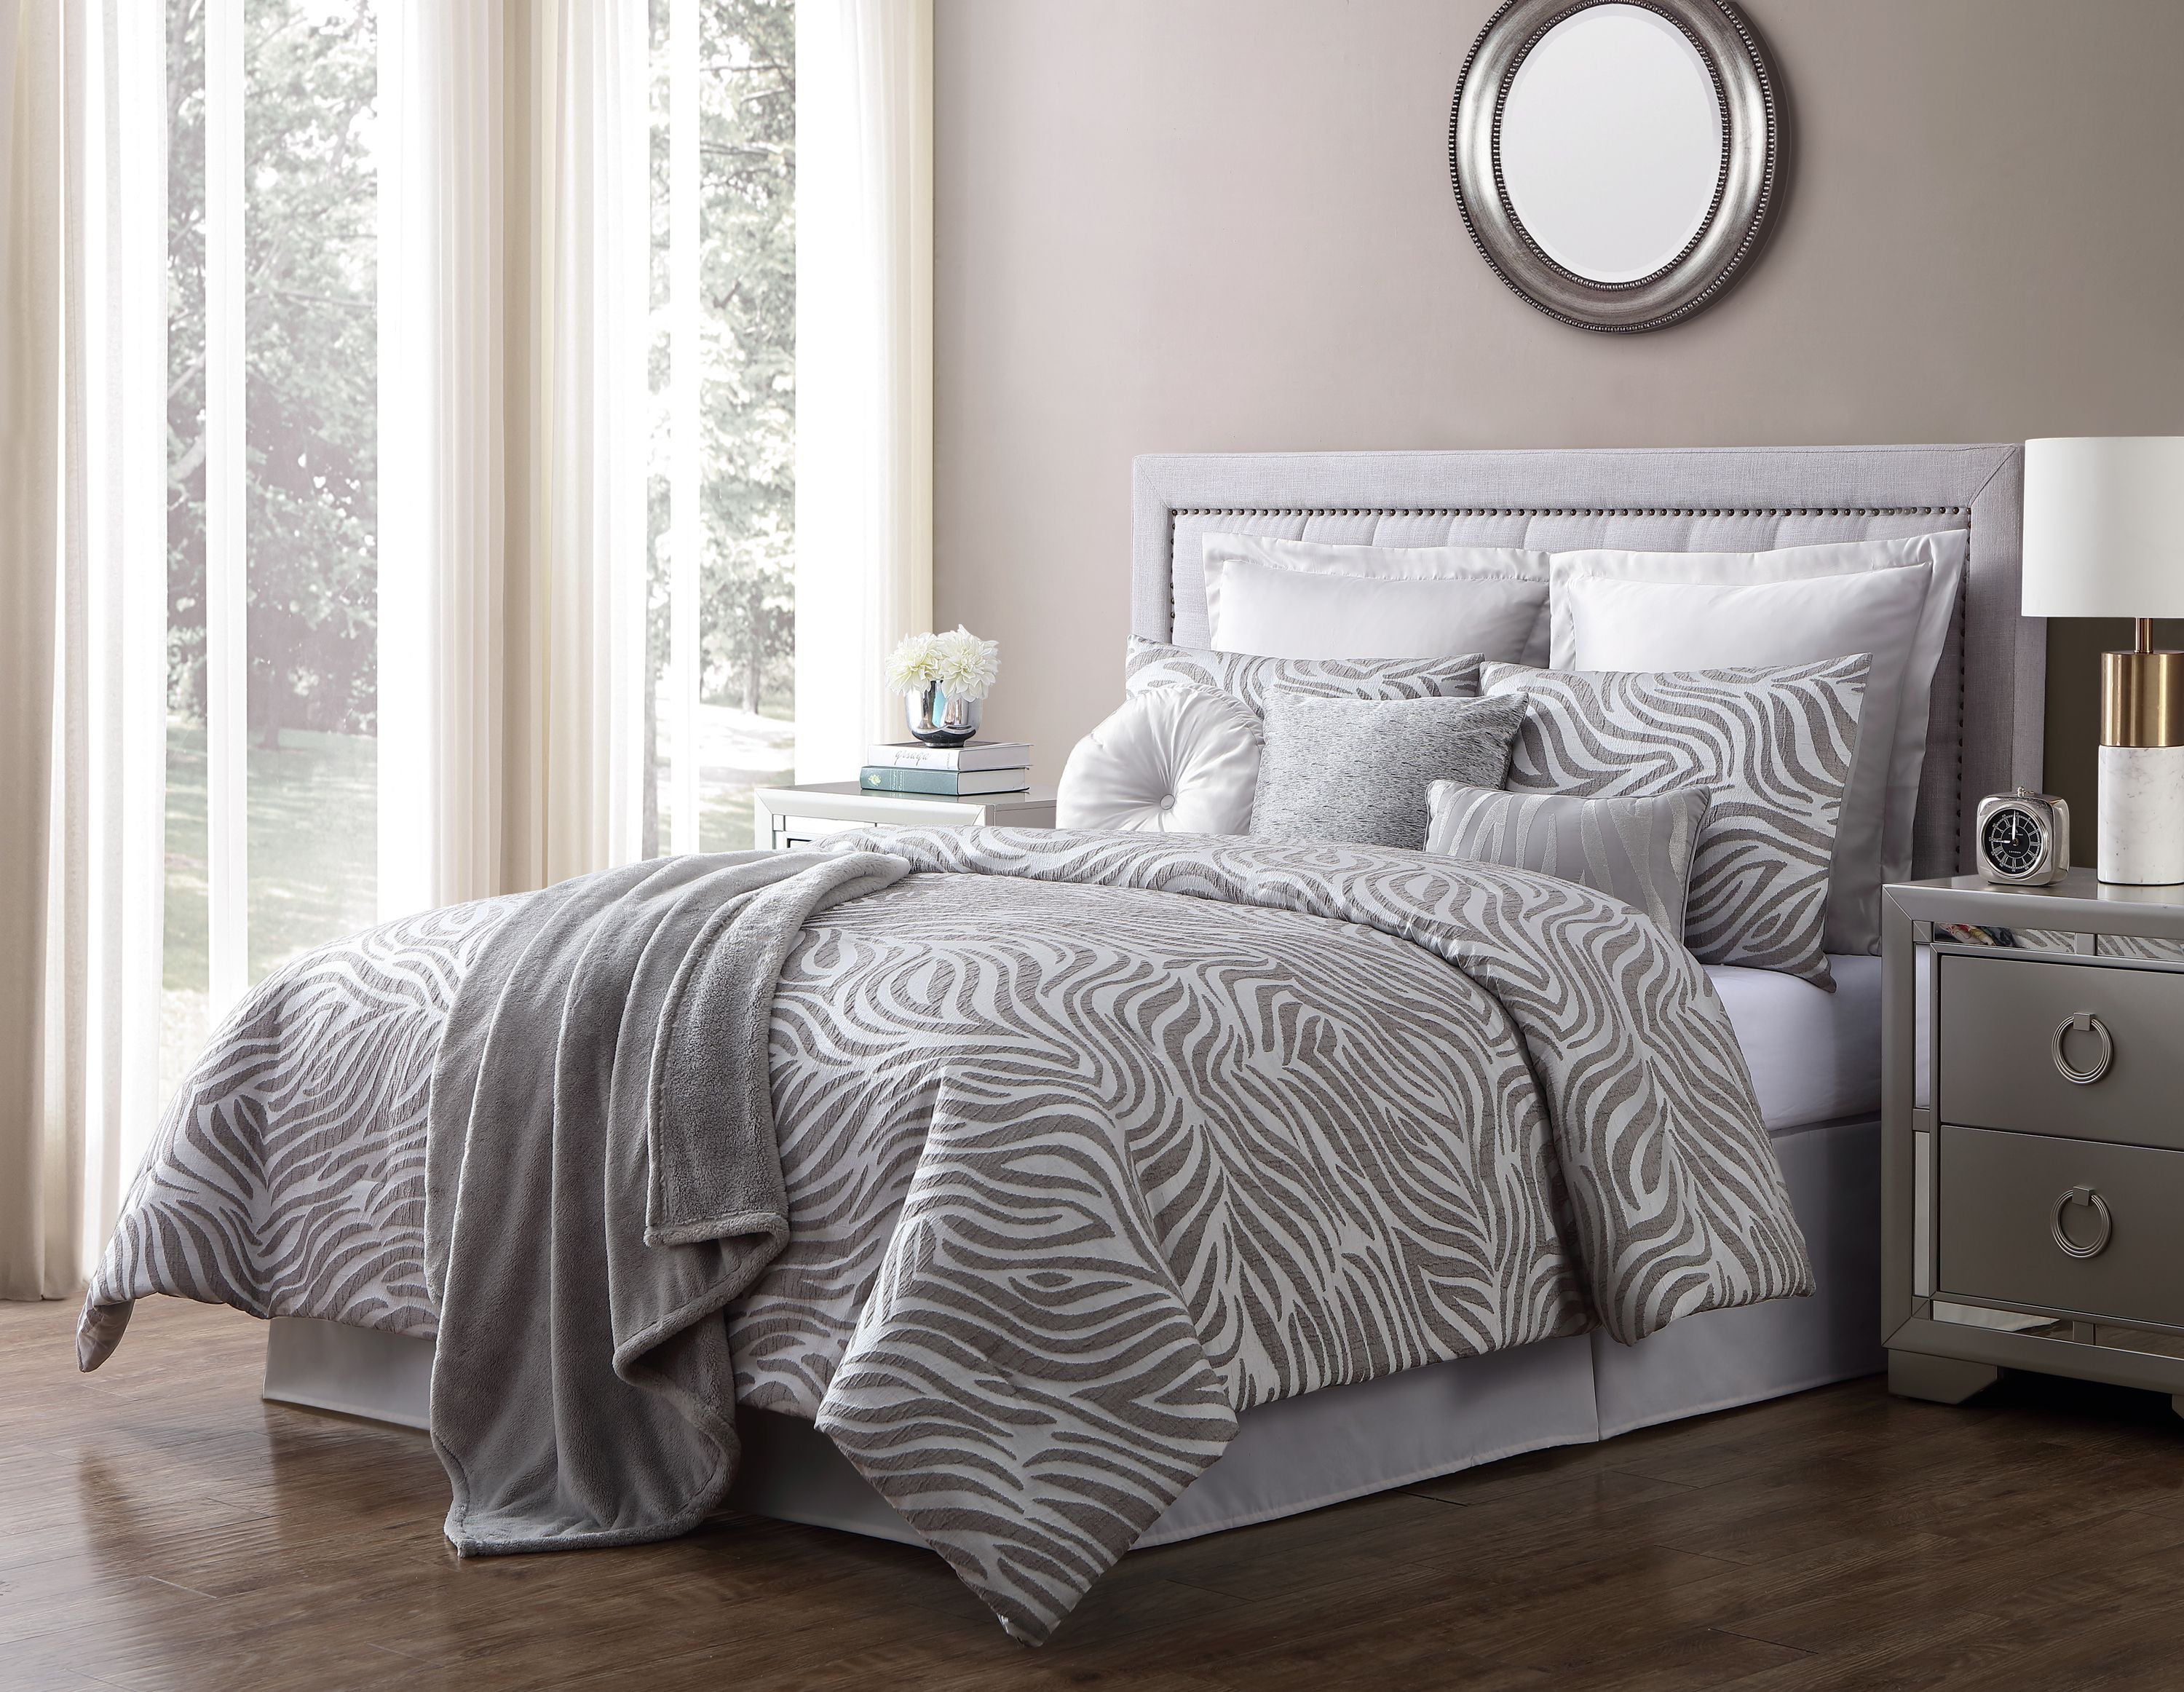 VCNY Home Serengeti Jacquard Zebra Comforter Set, California King, Grey ...